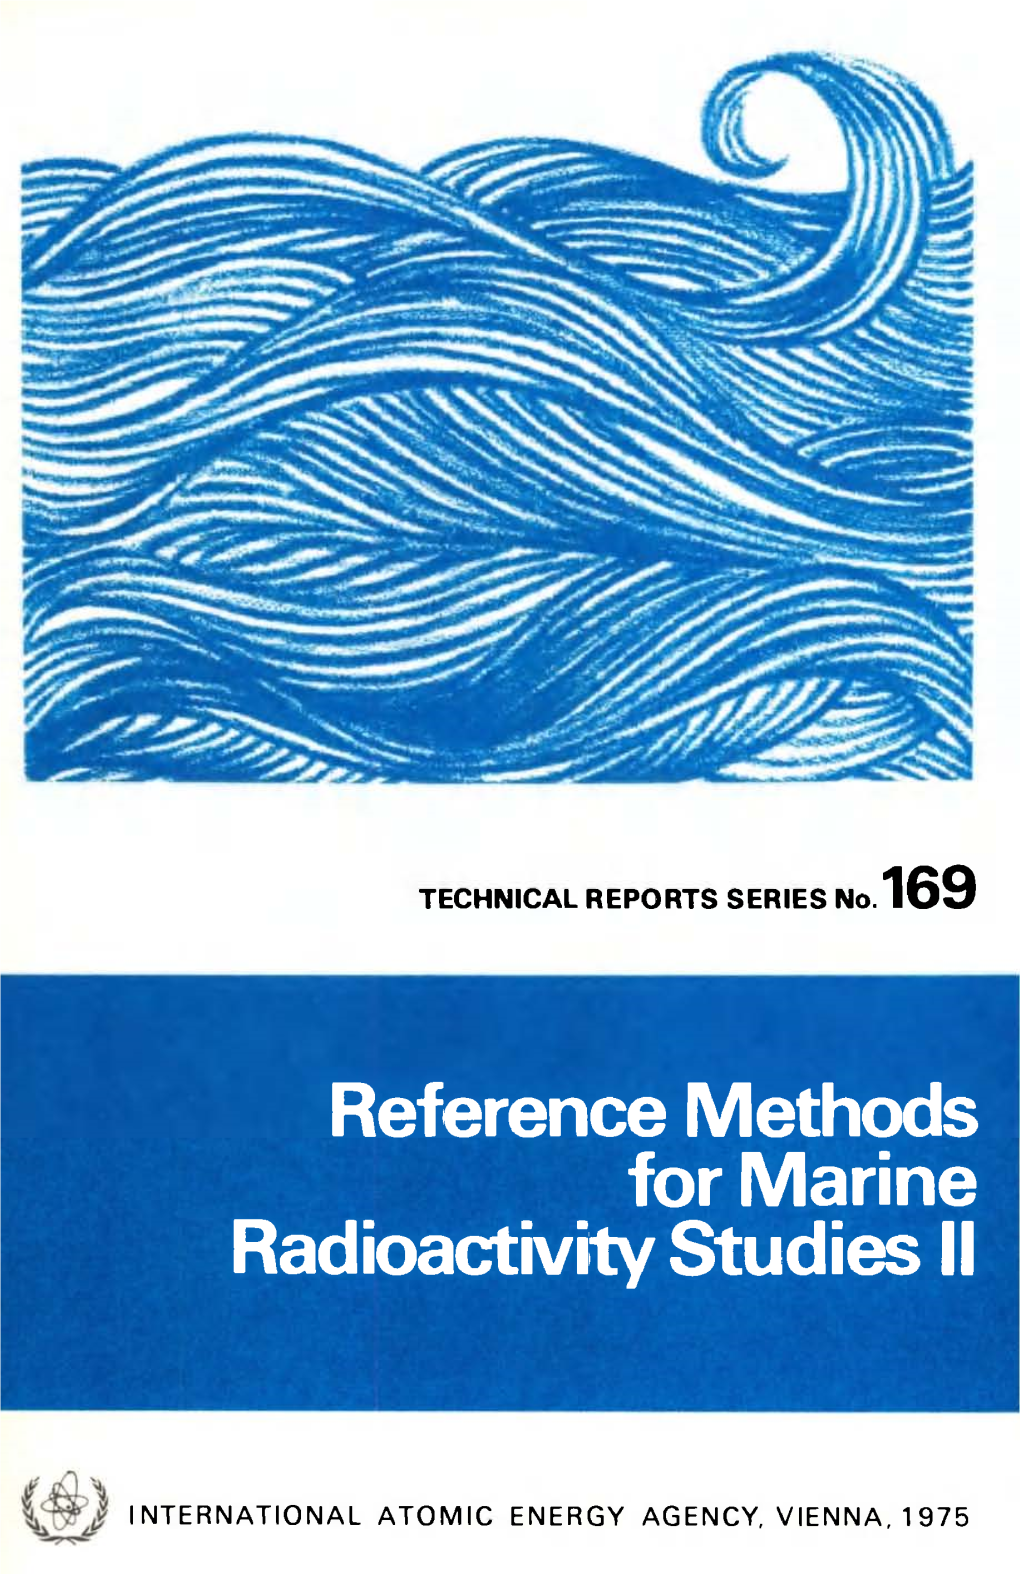 Reference Methods for Marine Radioactivity Studies II